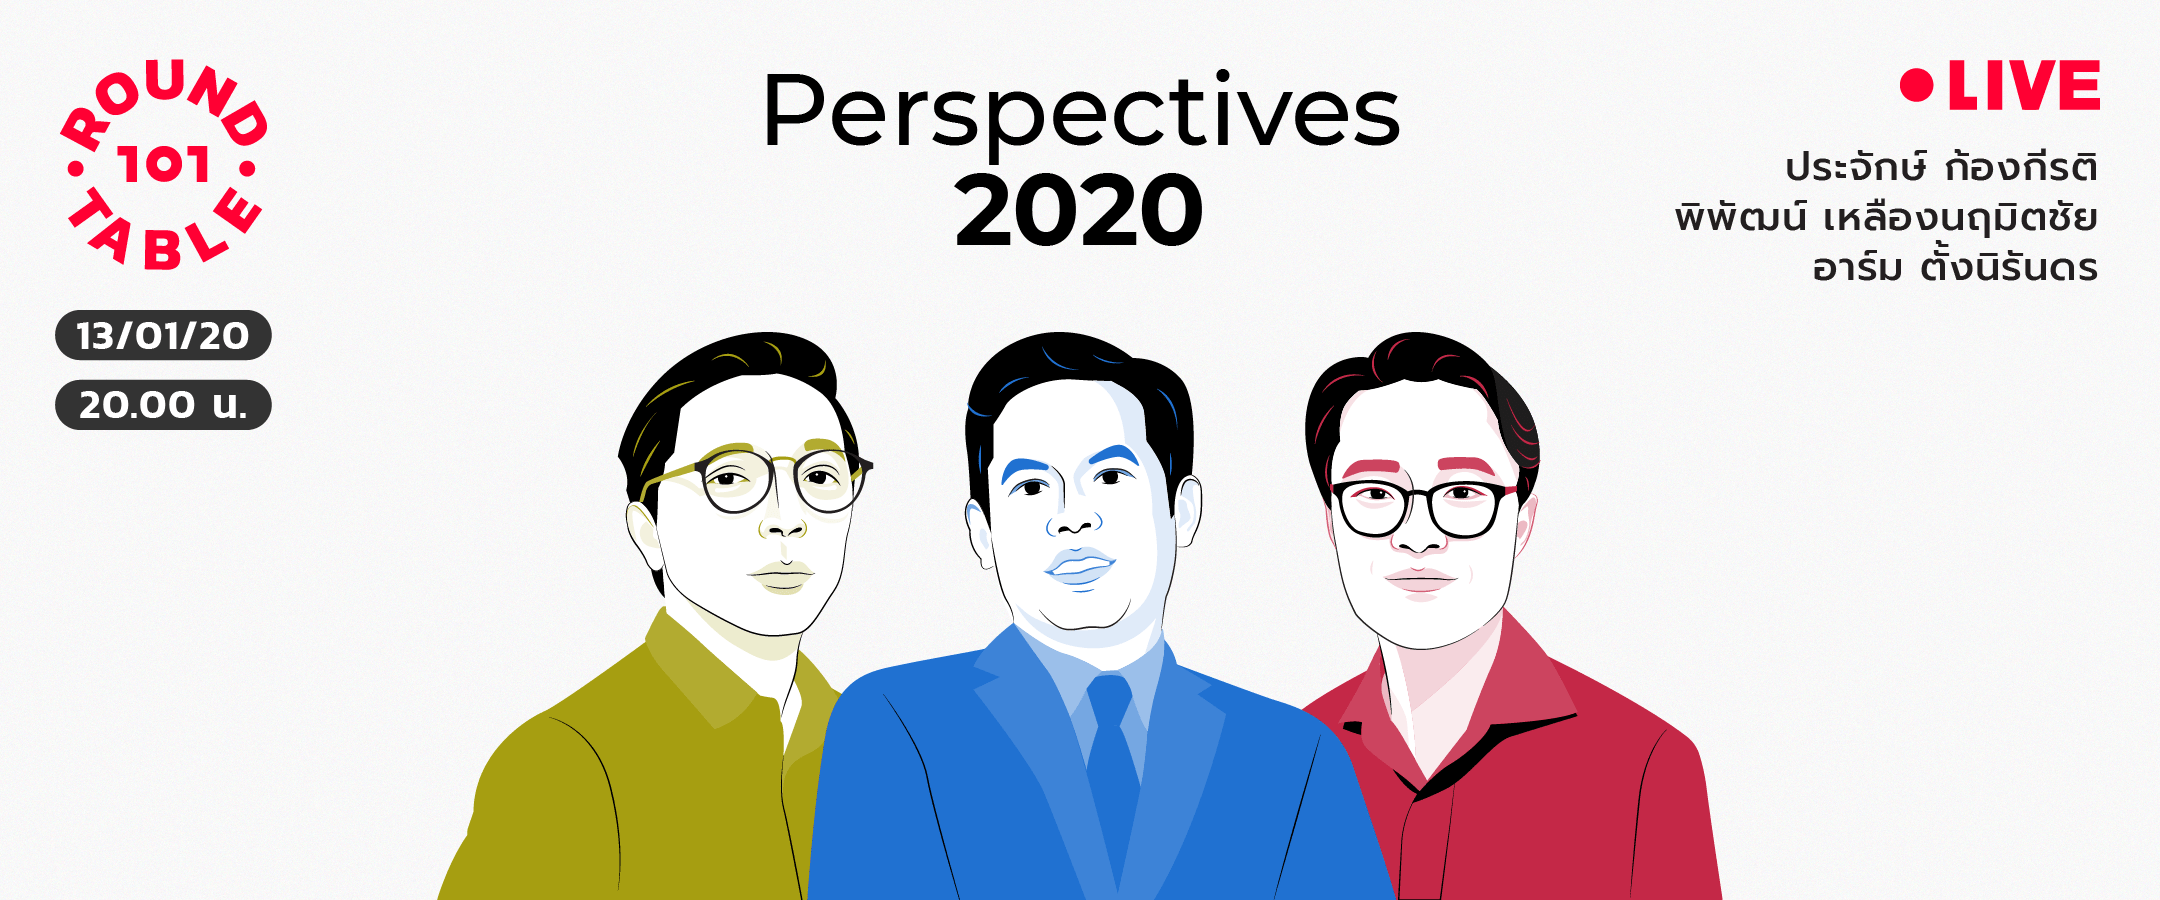 101 Round Table "จับตาอนาคตไทยและโลก ปี 2020"